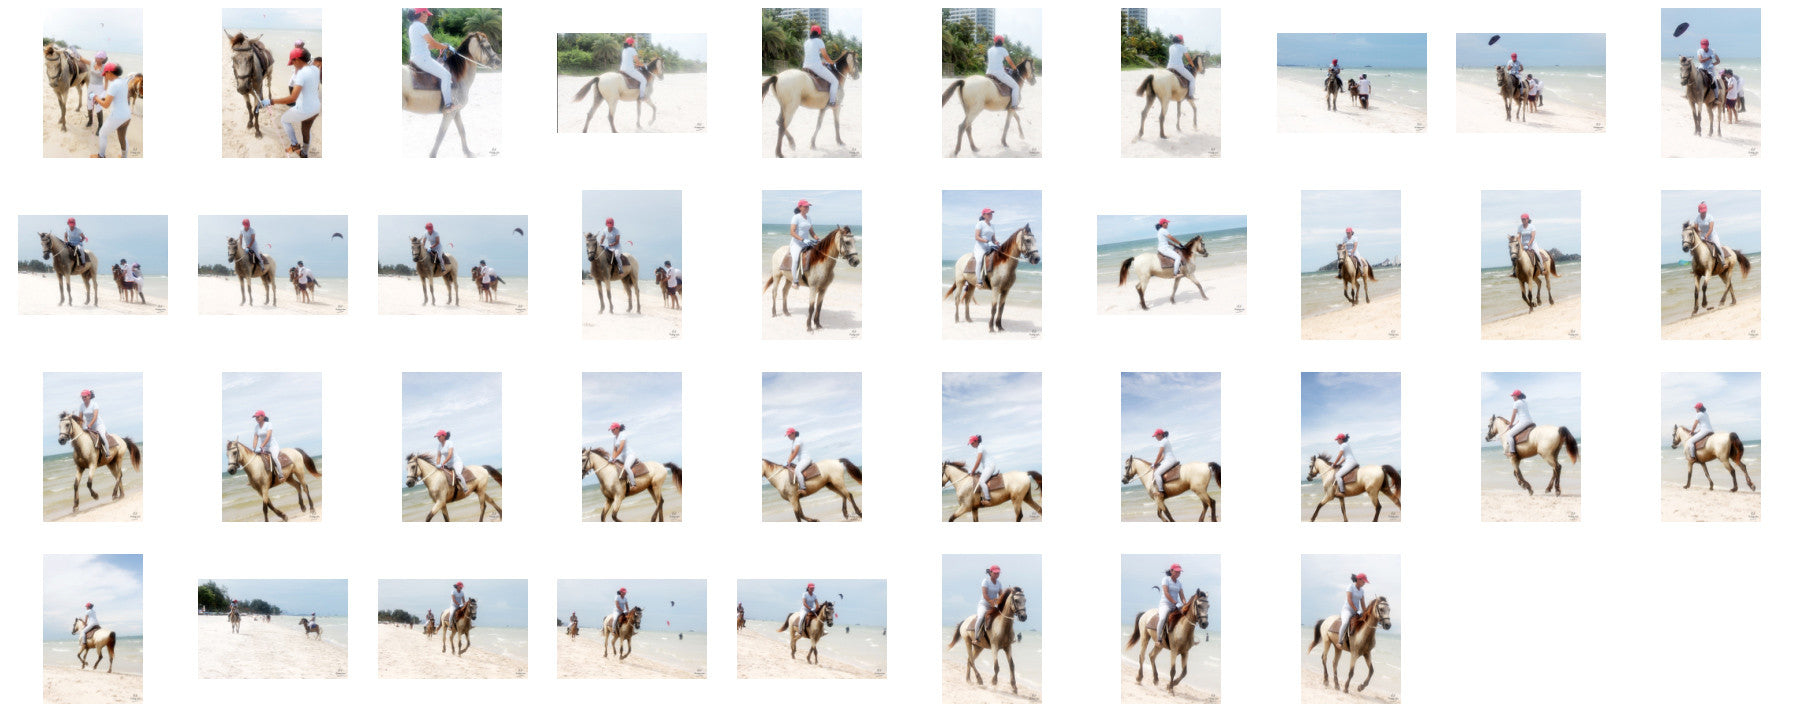 Nam in Jodhpurs Riding with Saddle on Buckskin Horse, Part 1 - Riding.Vision